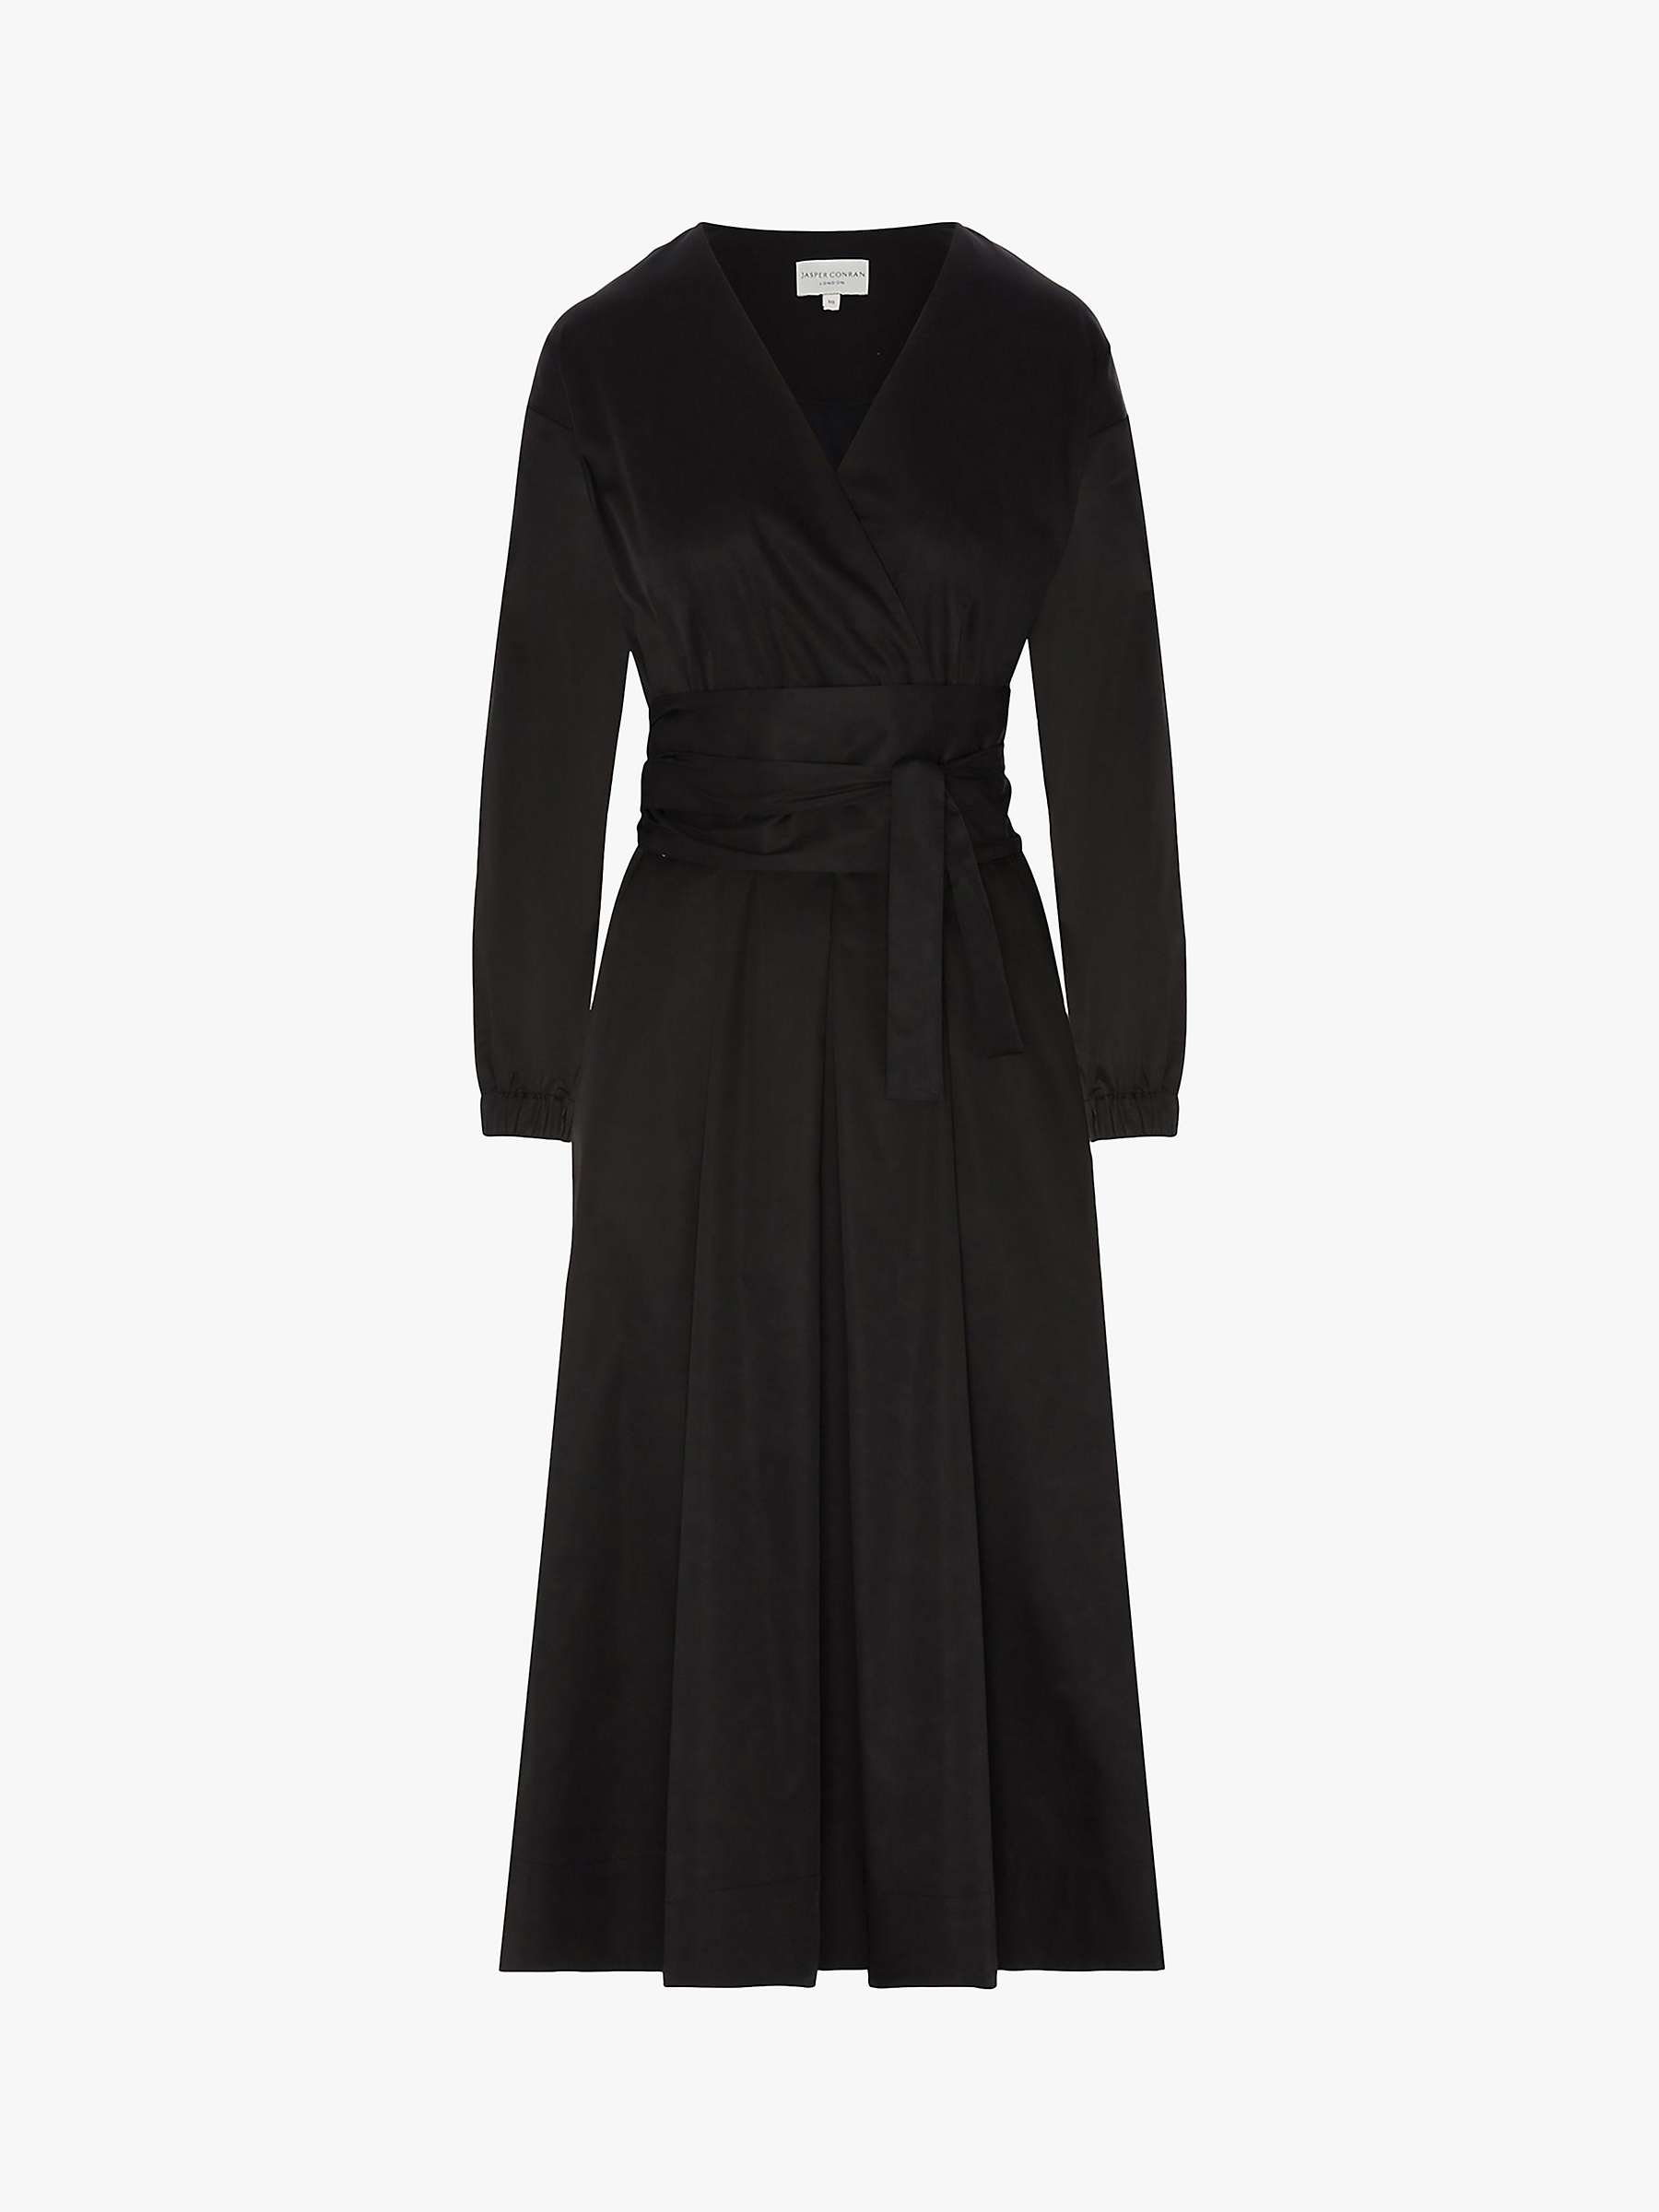 Jasper Conran Connie Kimono Wrap Dress, Black at John Lewis & Partners